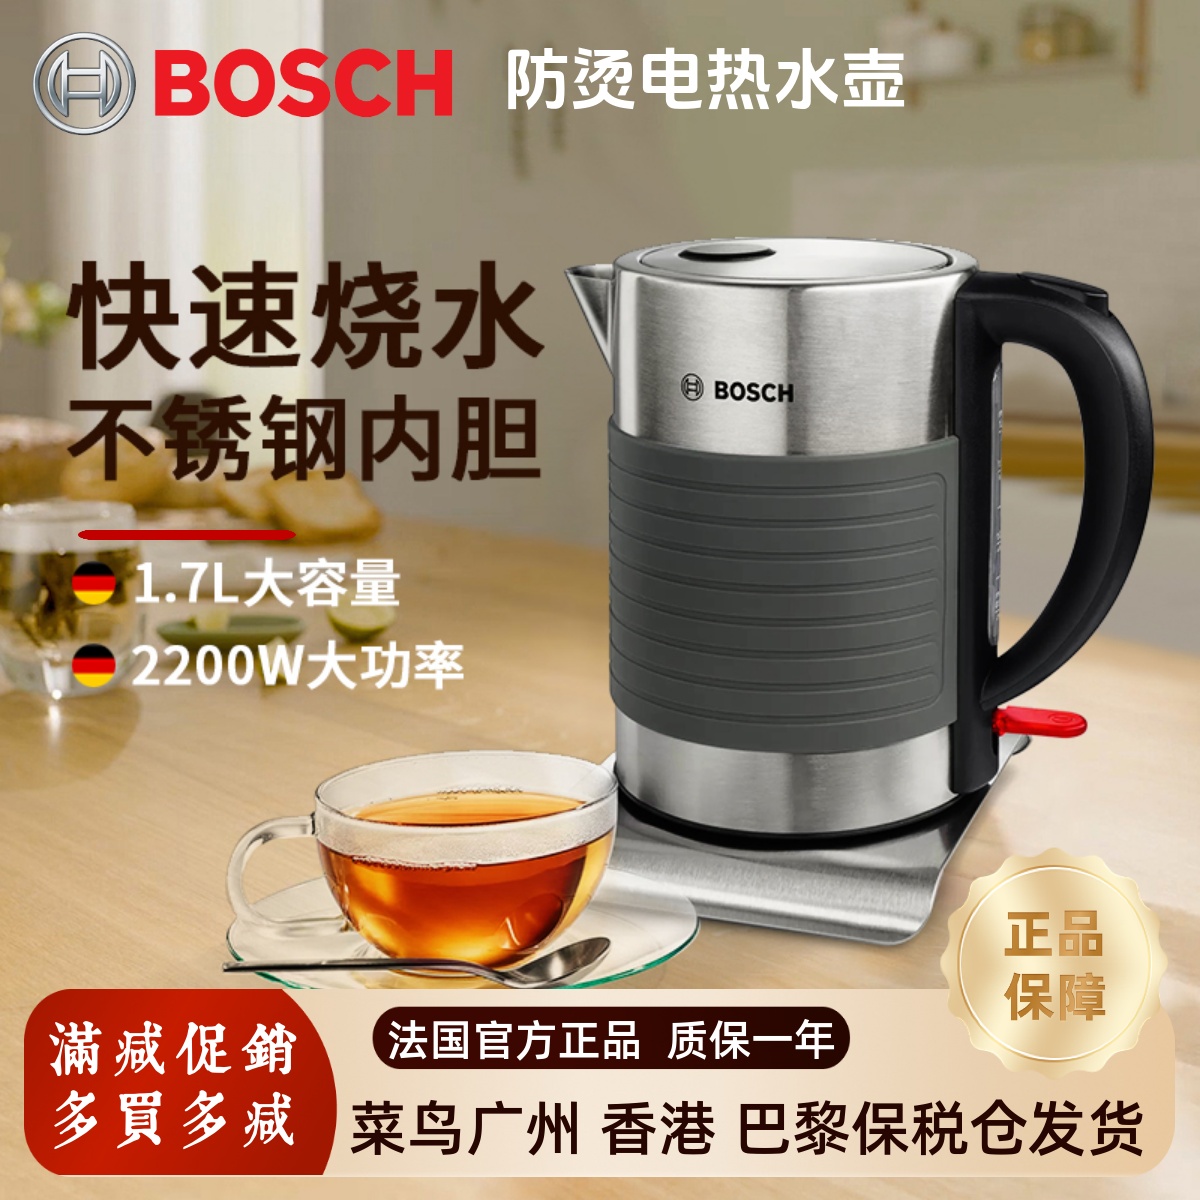 Bosch/博世德国进口 不锈钢防烫电热烧水壶家用大容量自动控温